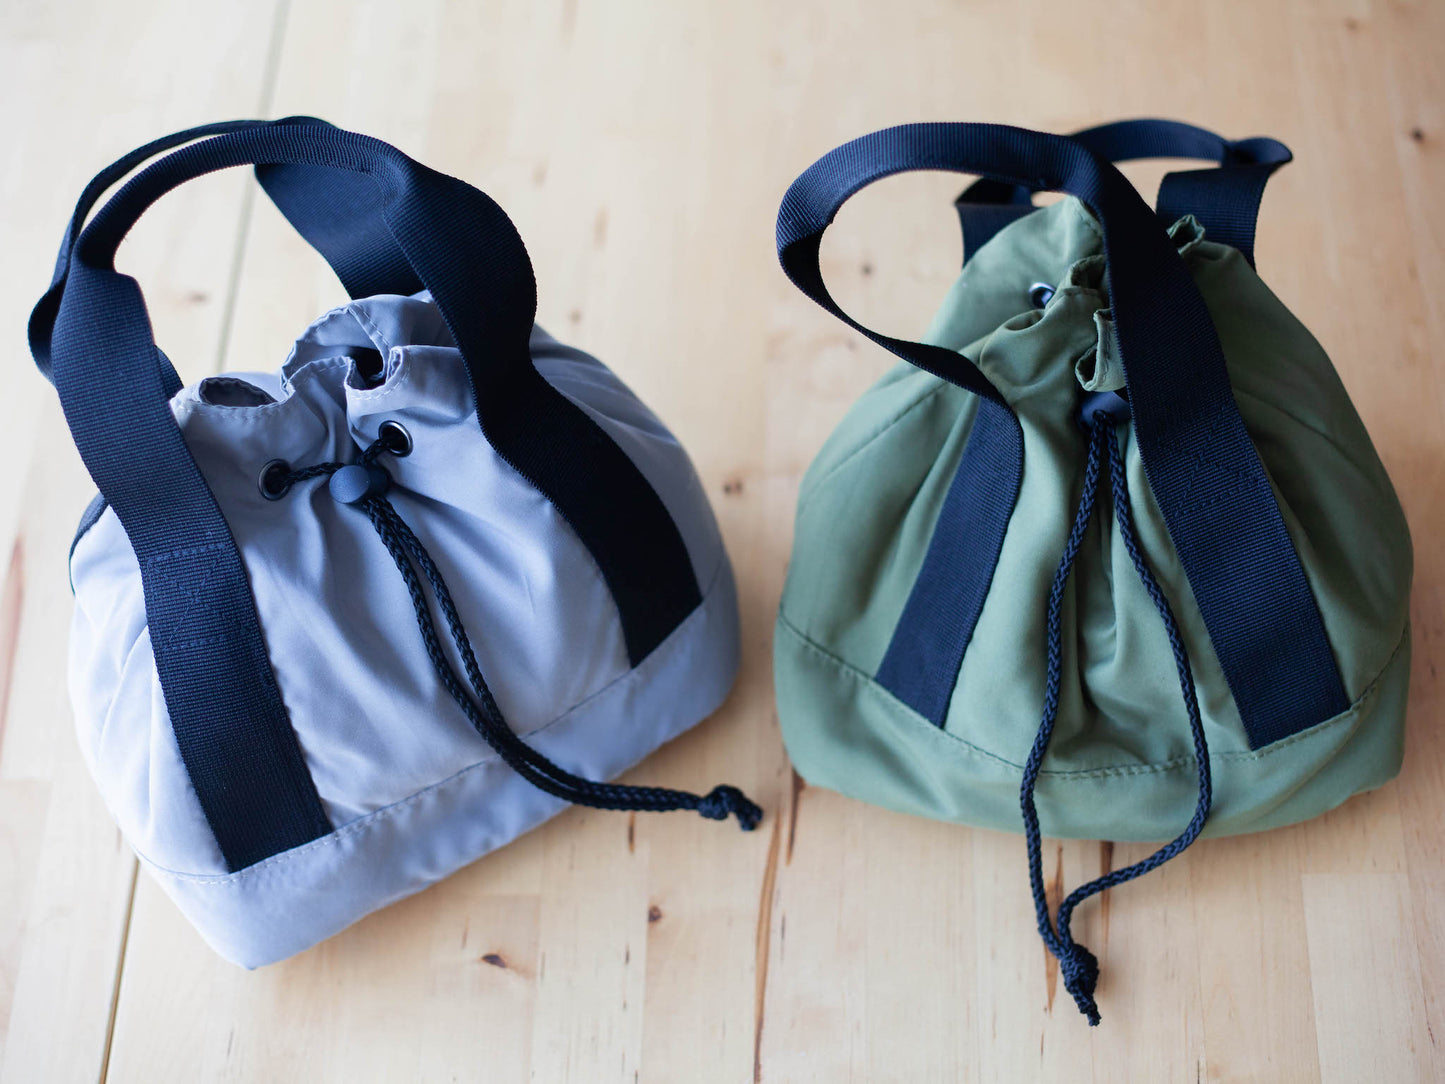 Drawstring Cooler Bag | Moss Green